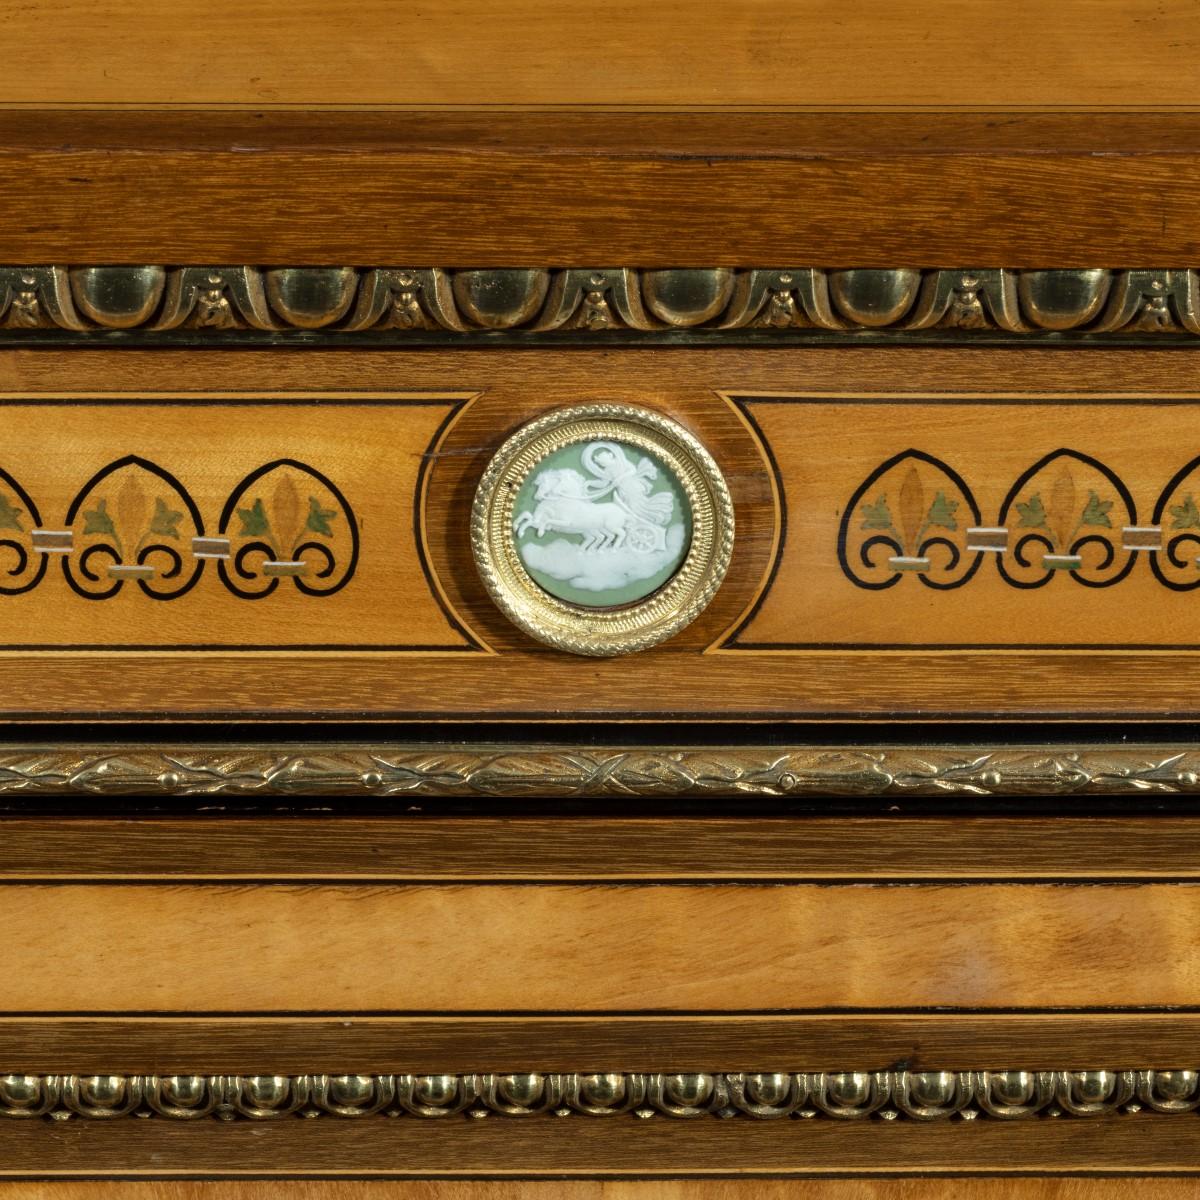 Victorian satinwood breakfront side cabinet